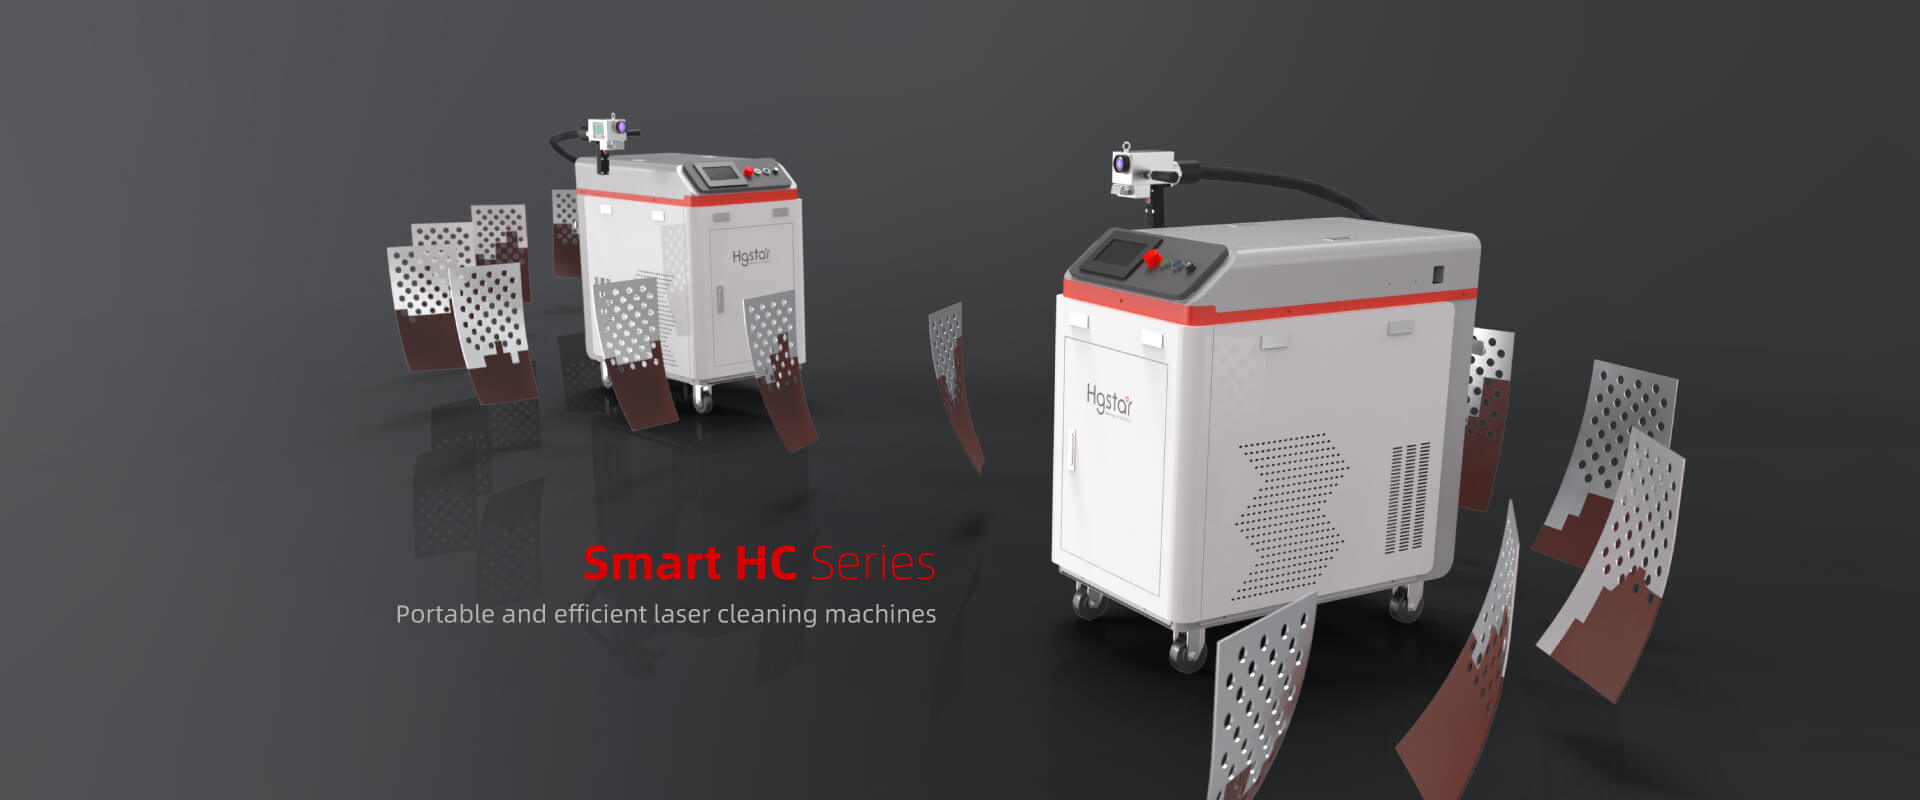 smart hc series laser cleaner